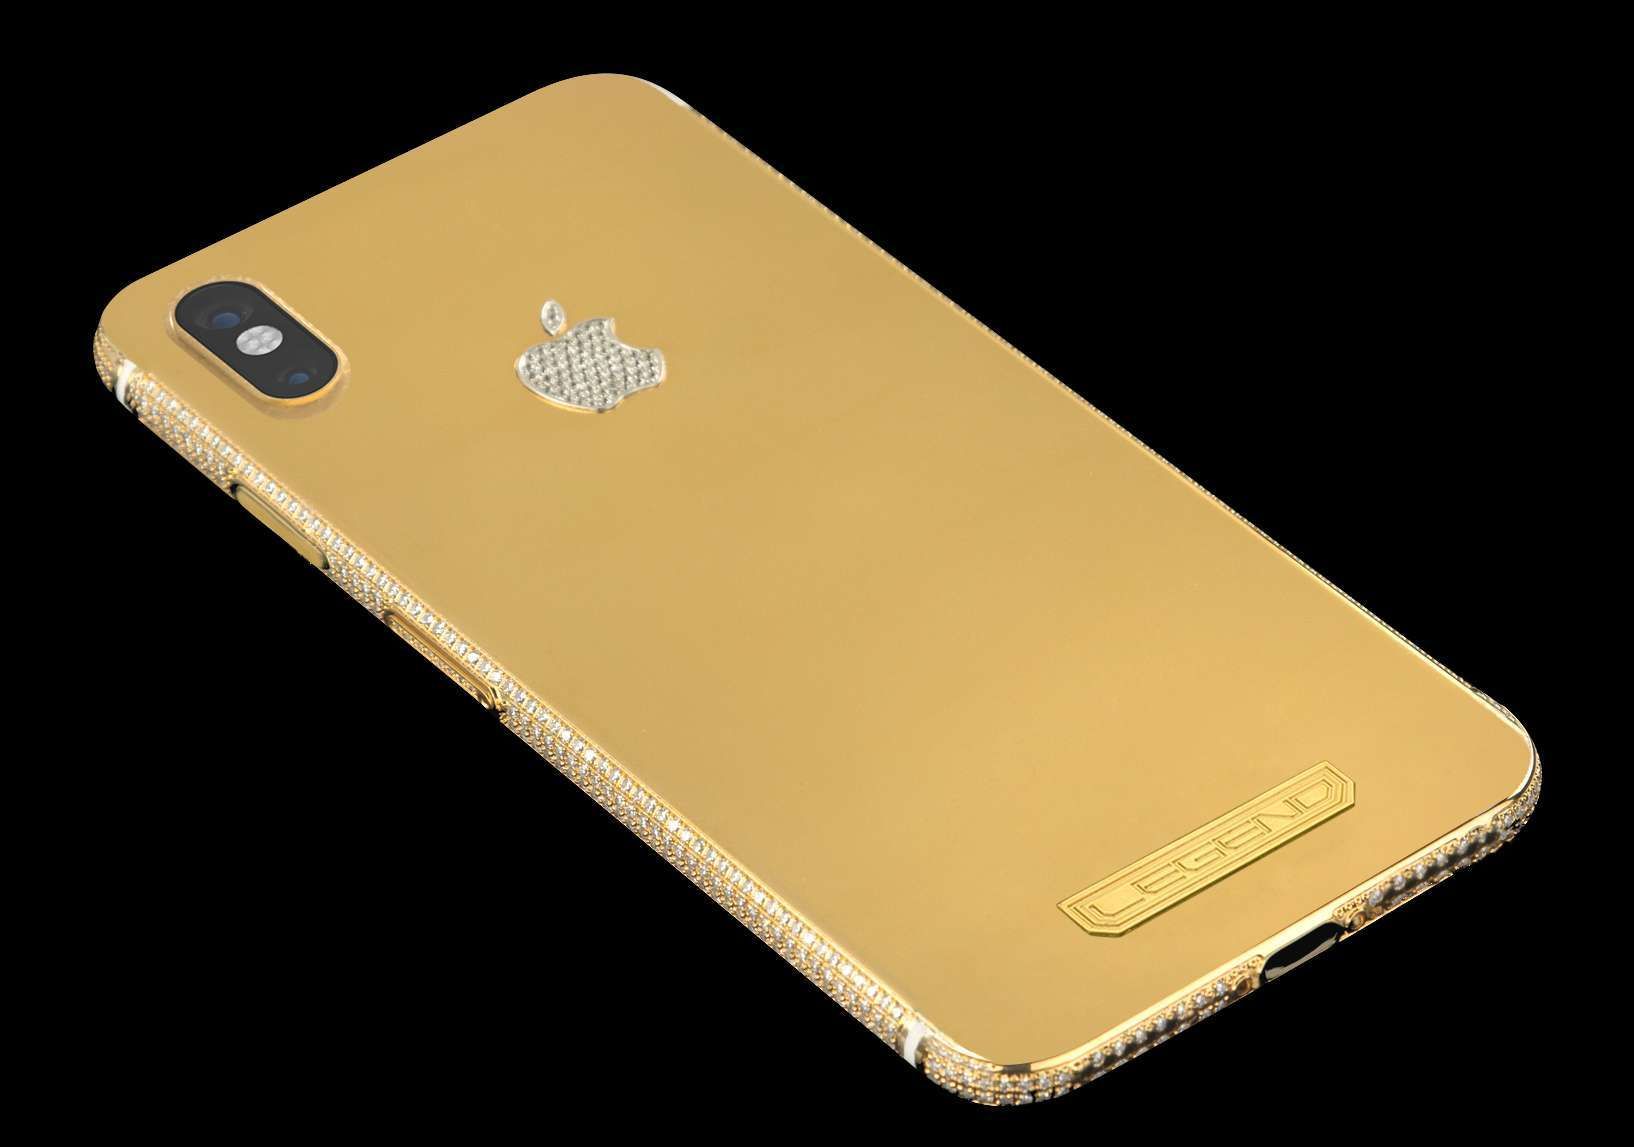 iPhone X 256Gb "Diamond Edition" 24k gold with 10.70ct diamonds Limited ...